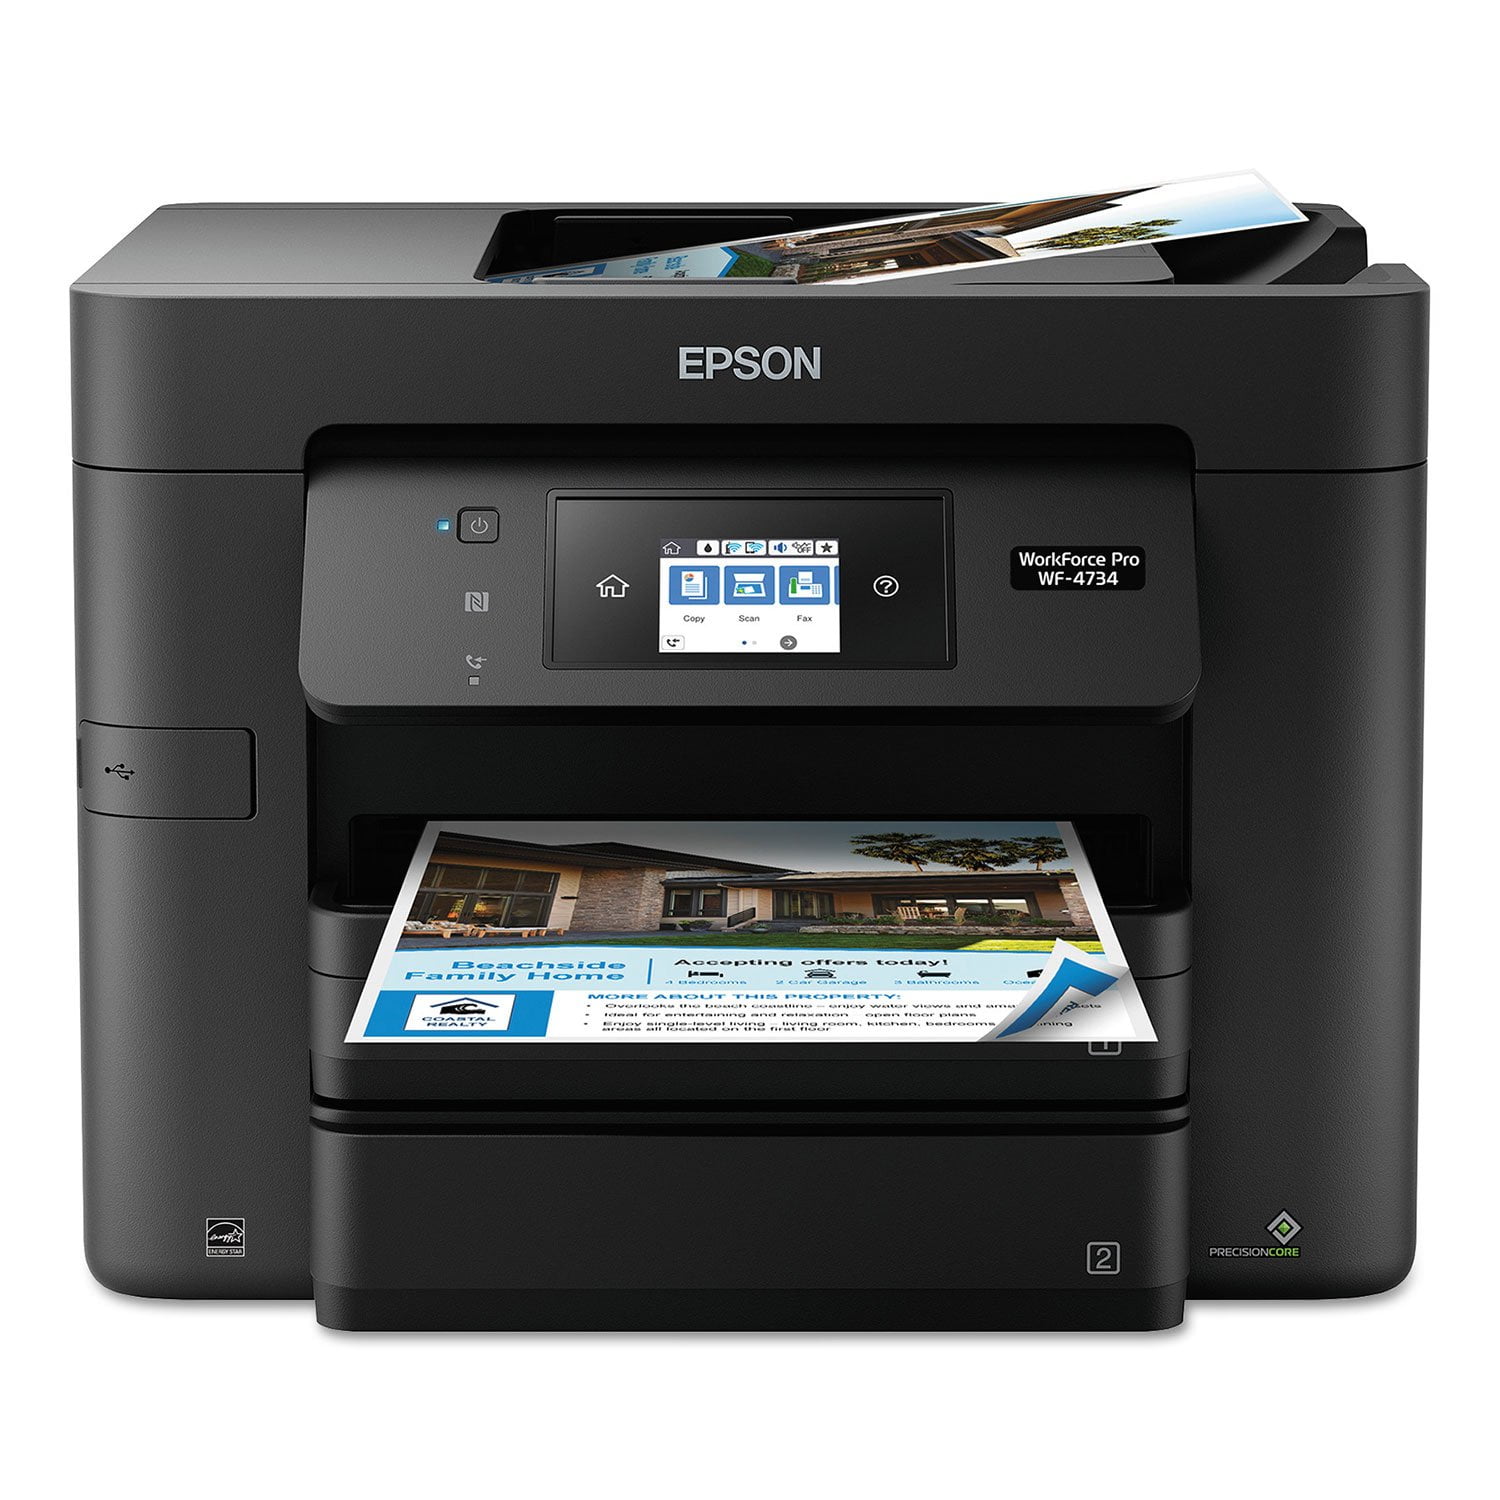 Epson WF-4734 Multifunction Wireless Inkjet Printer - Walmart.com